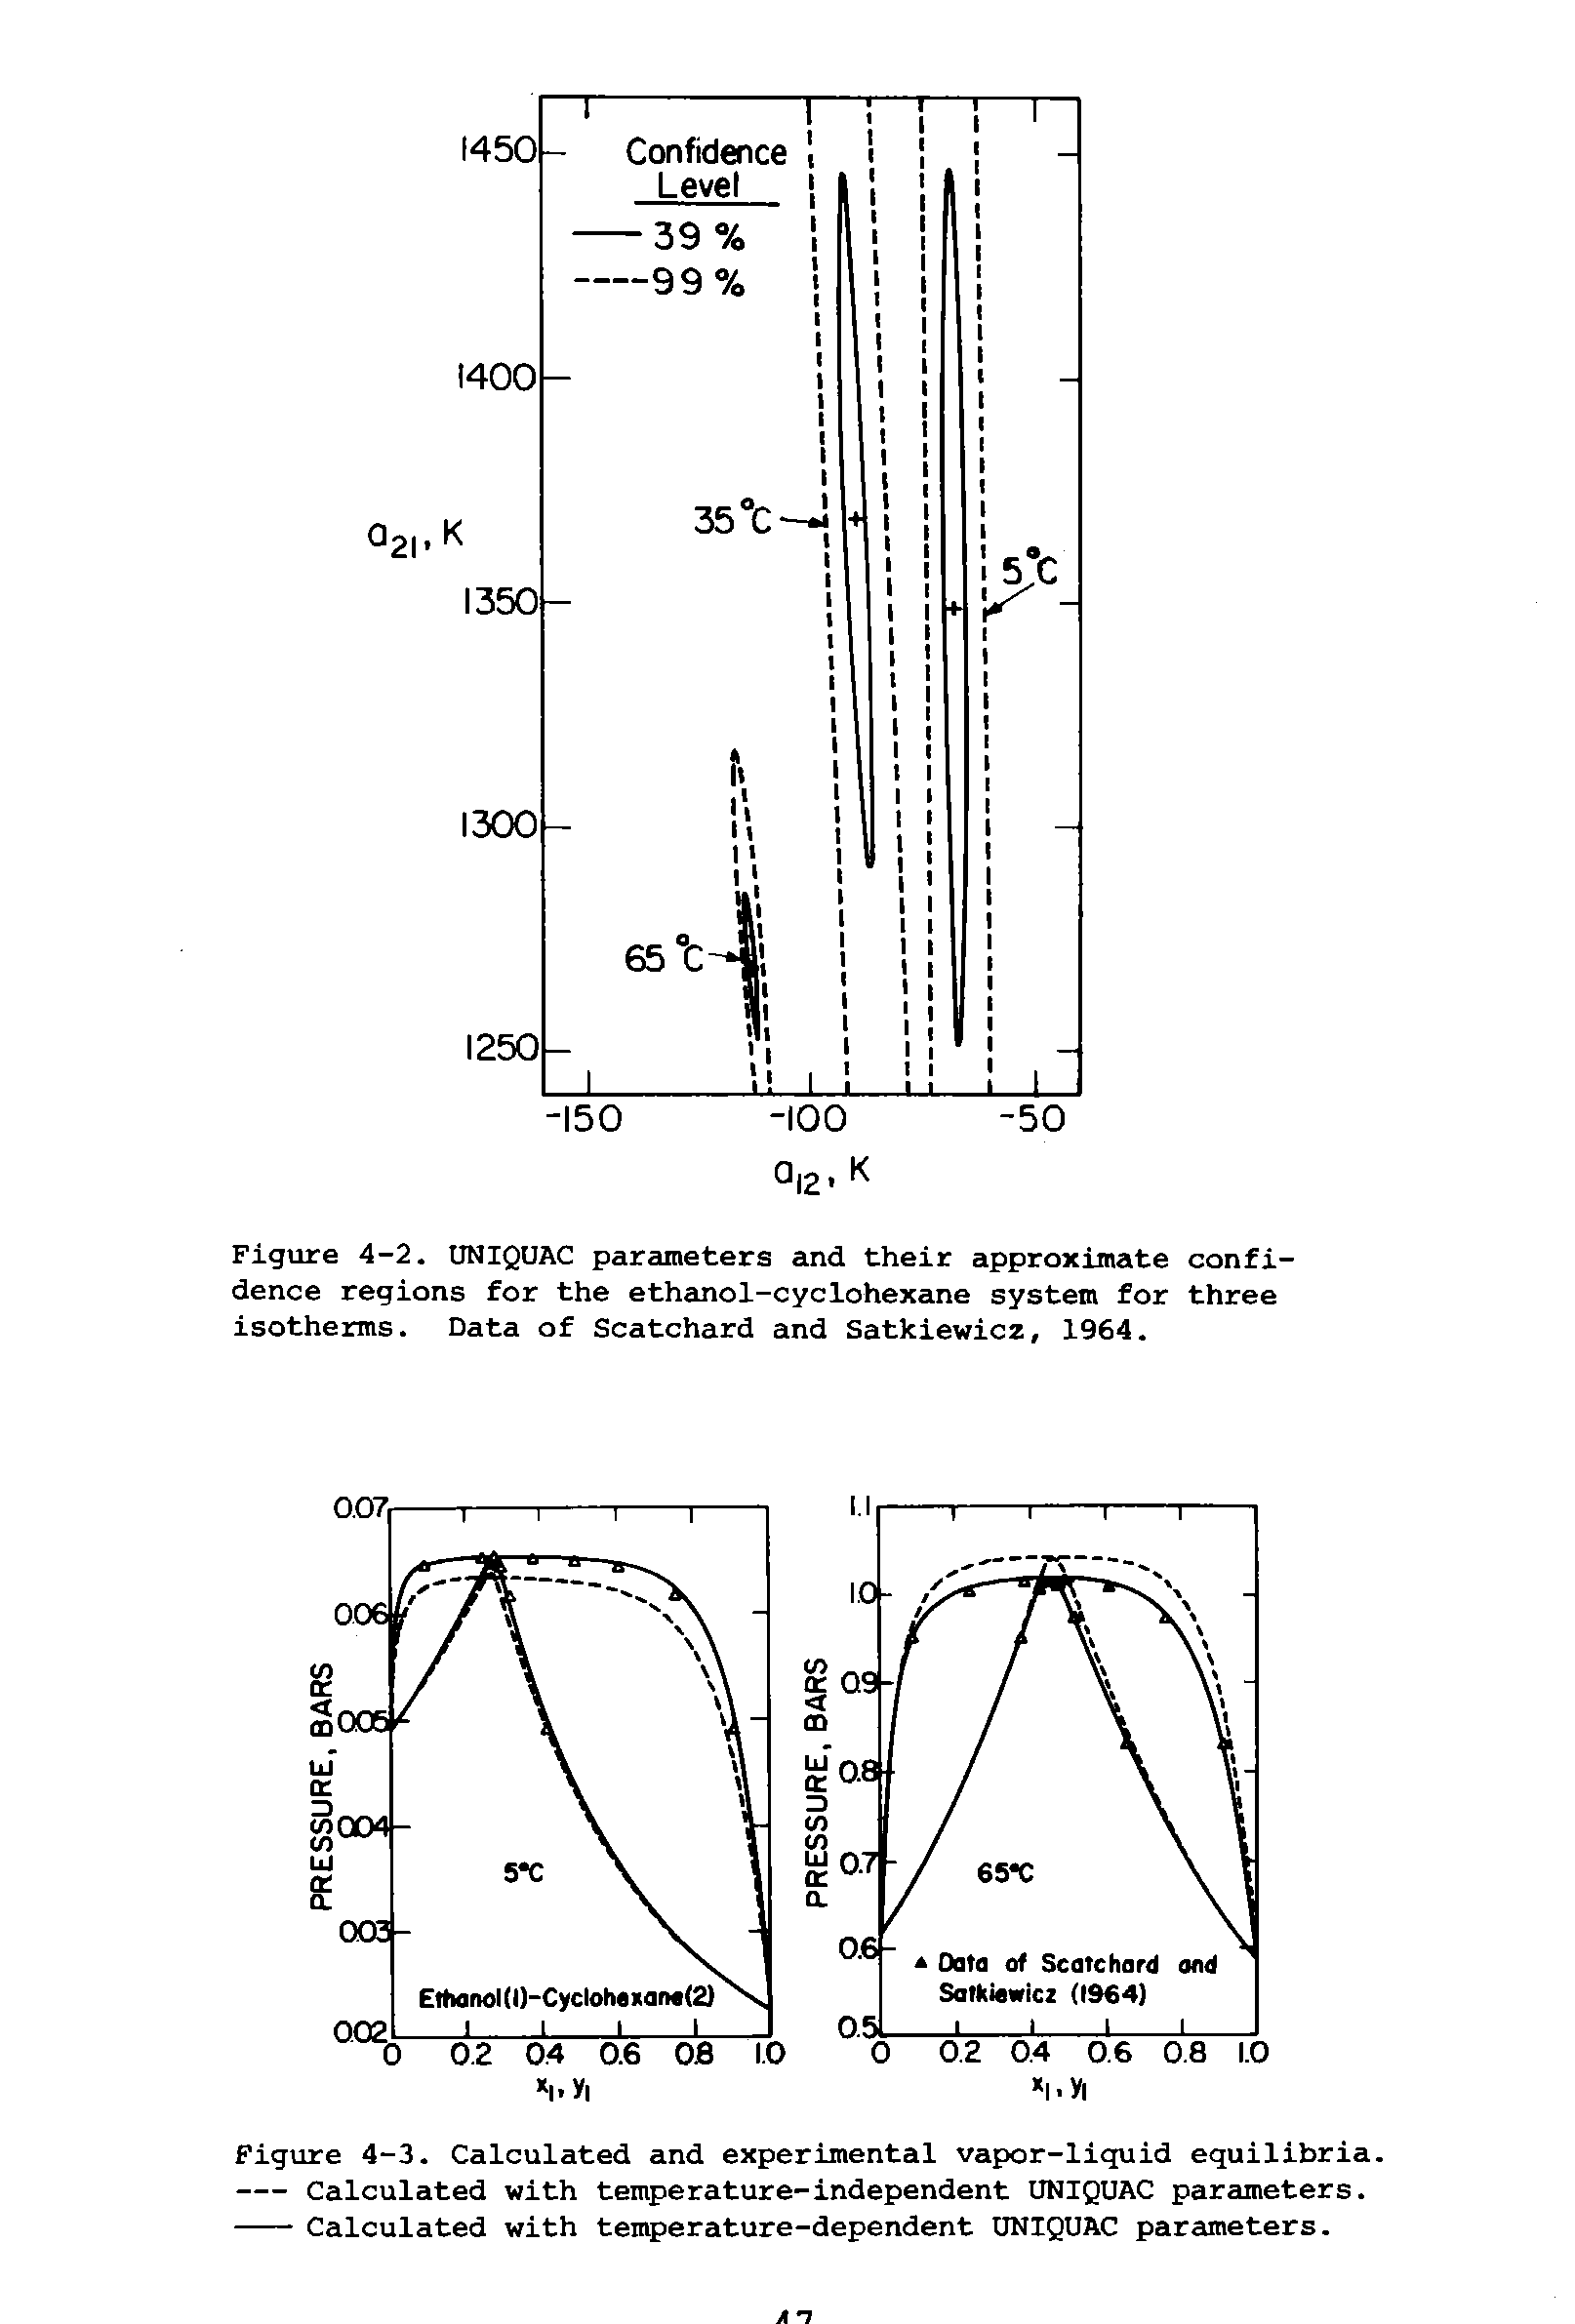 Figure 4-3. Calculated and experimental vapor-liquid equilibria.